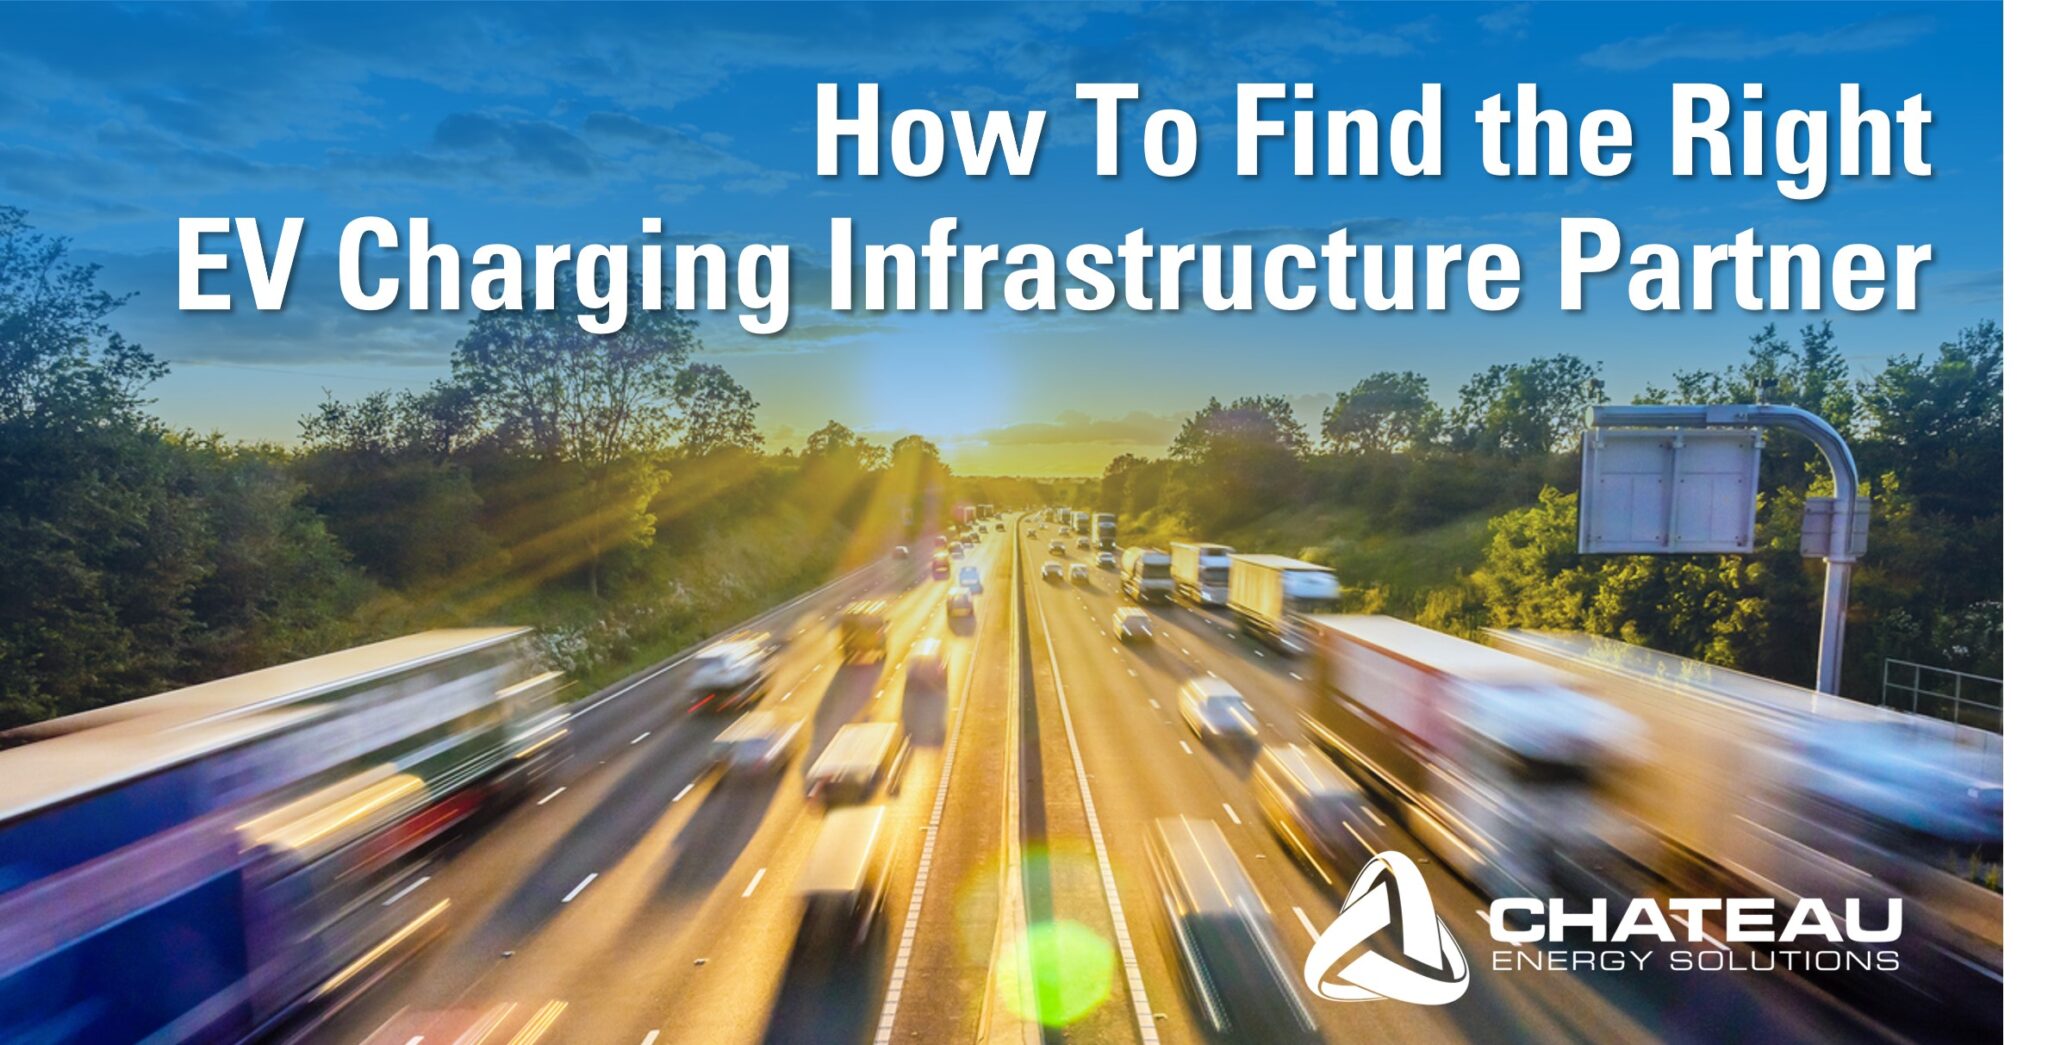 Finding an EV charging infrastructure partner